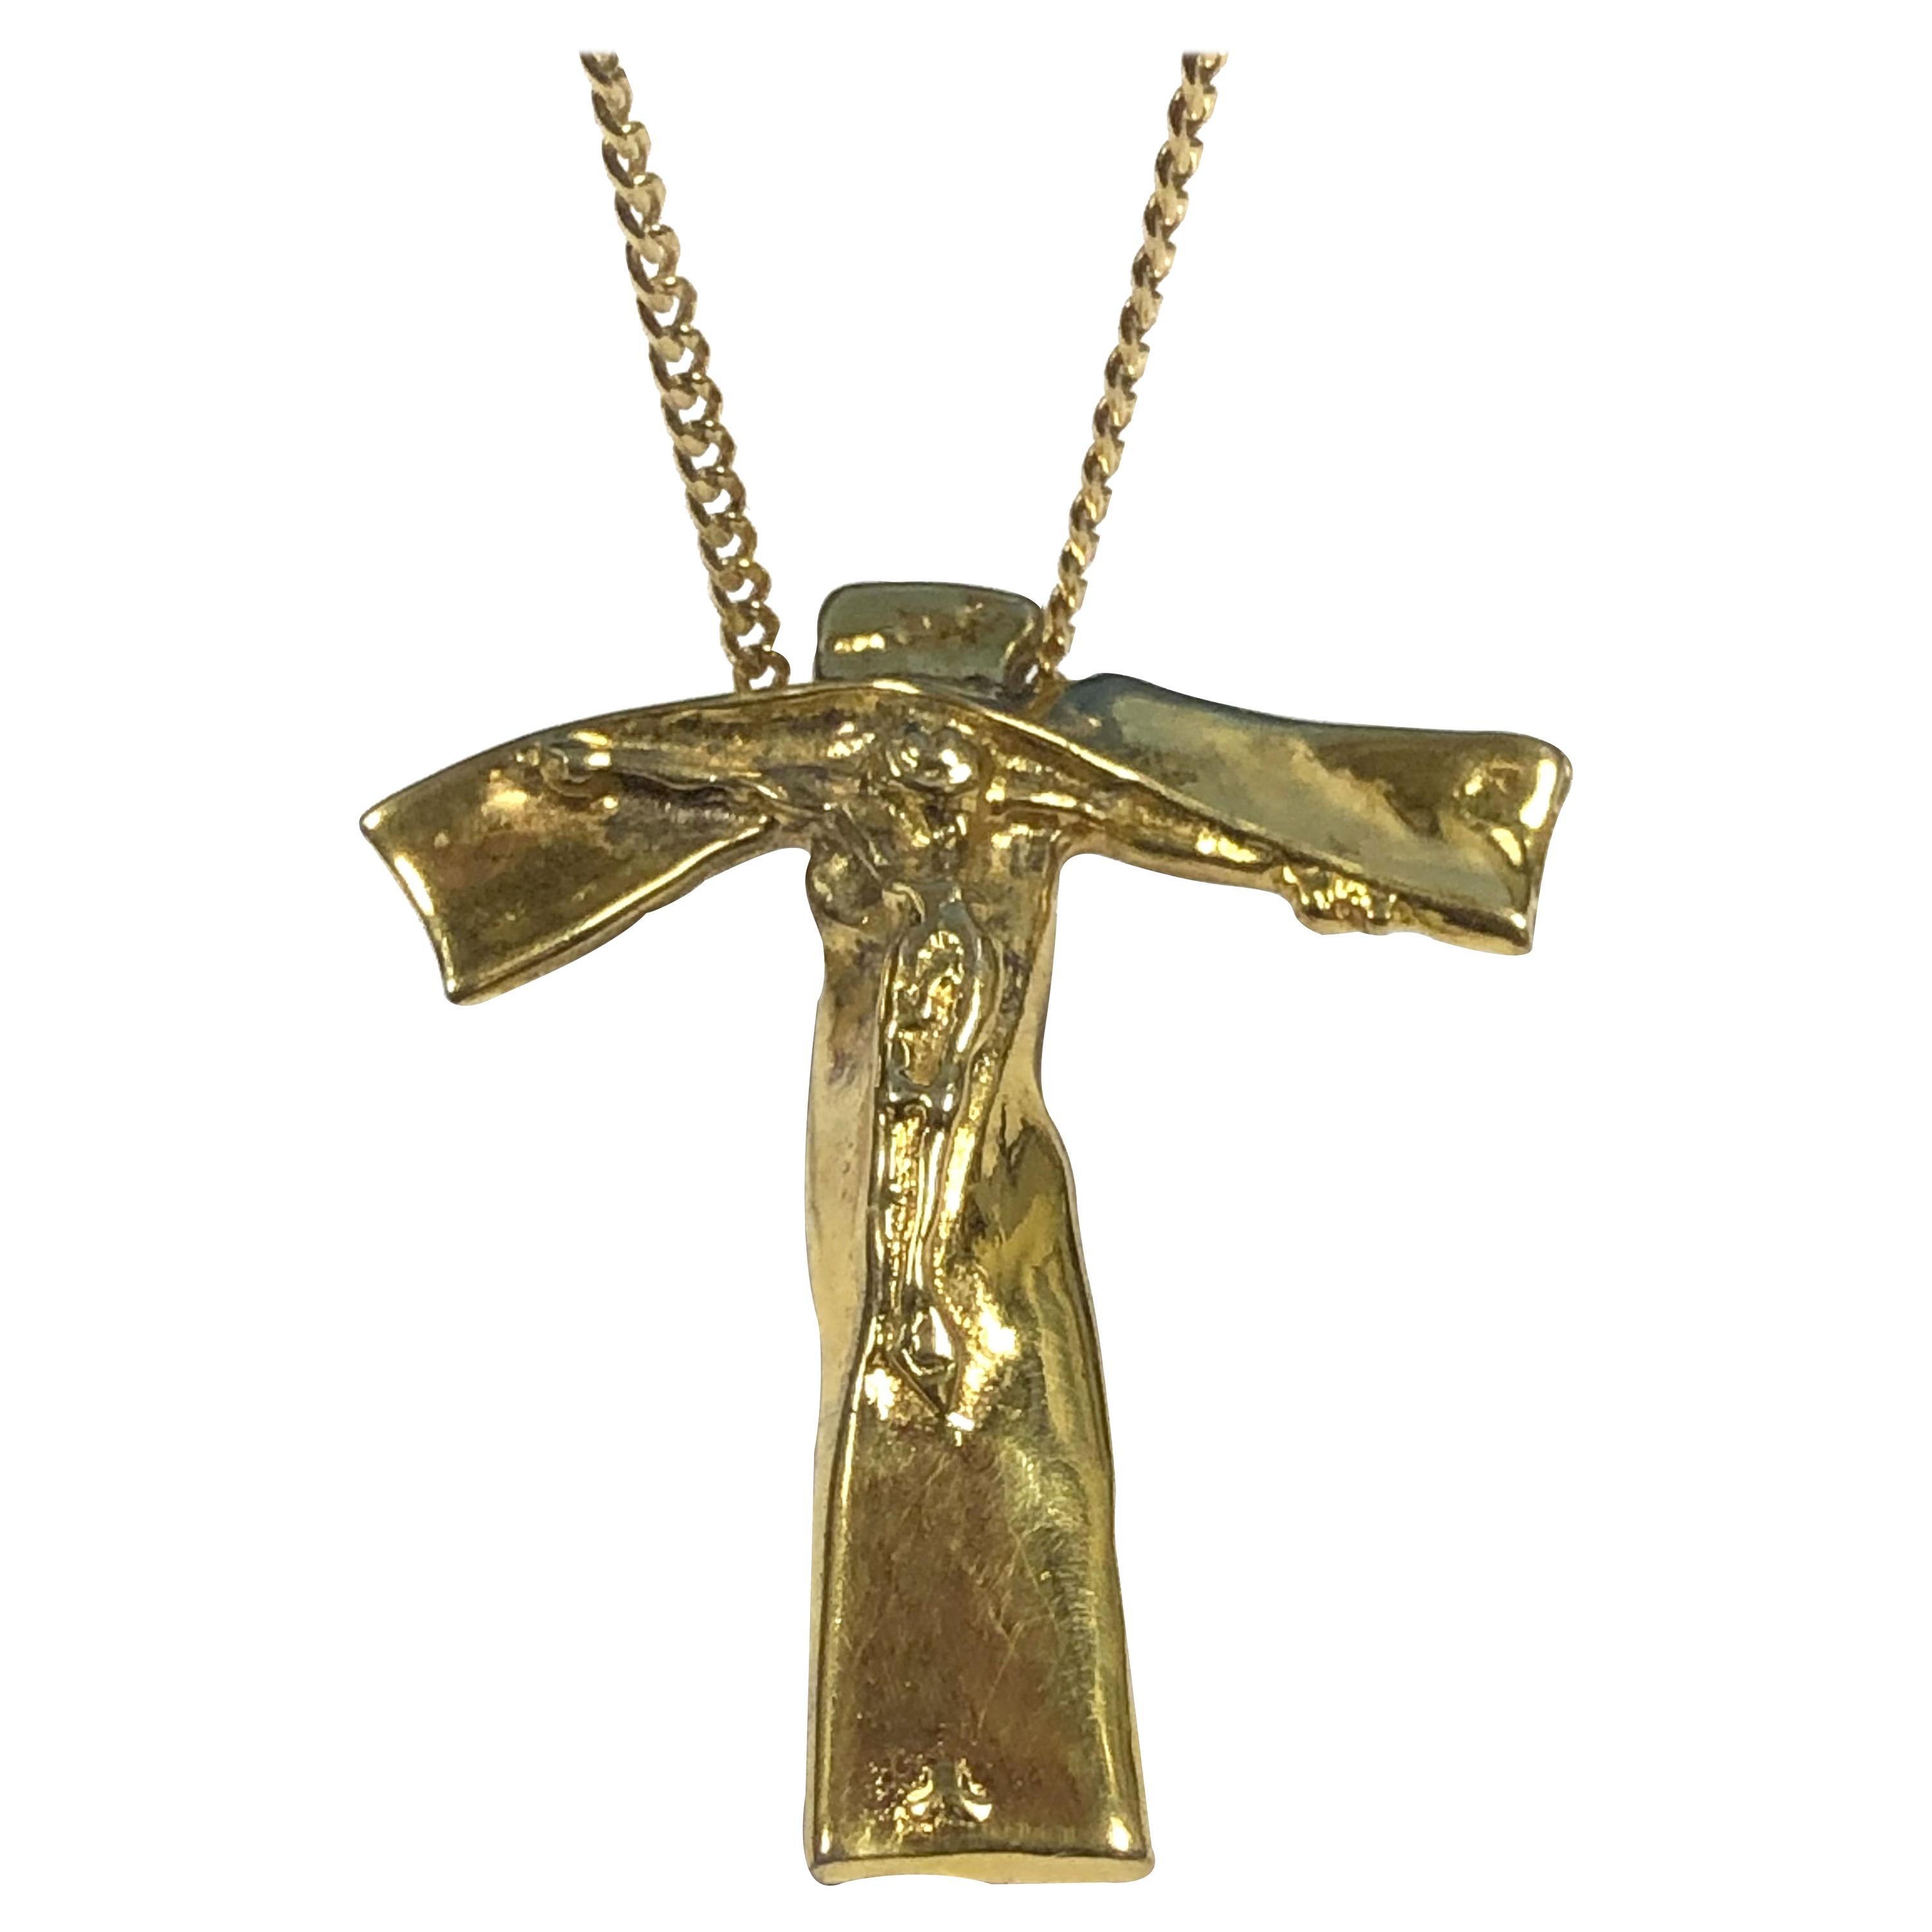 Salvadore Dali 1972 Vermeil Cross Crucifix Pendant Necklace